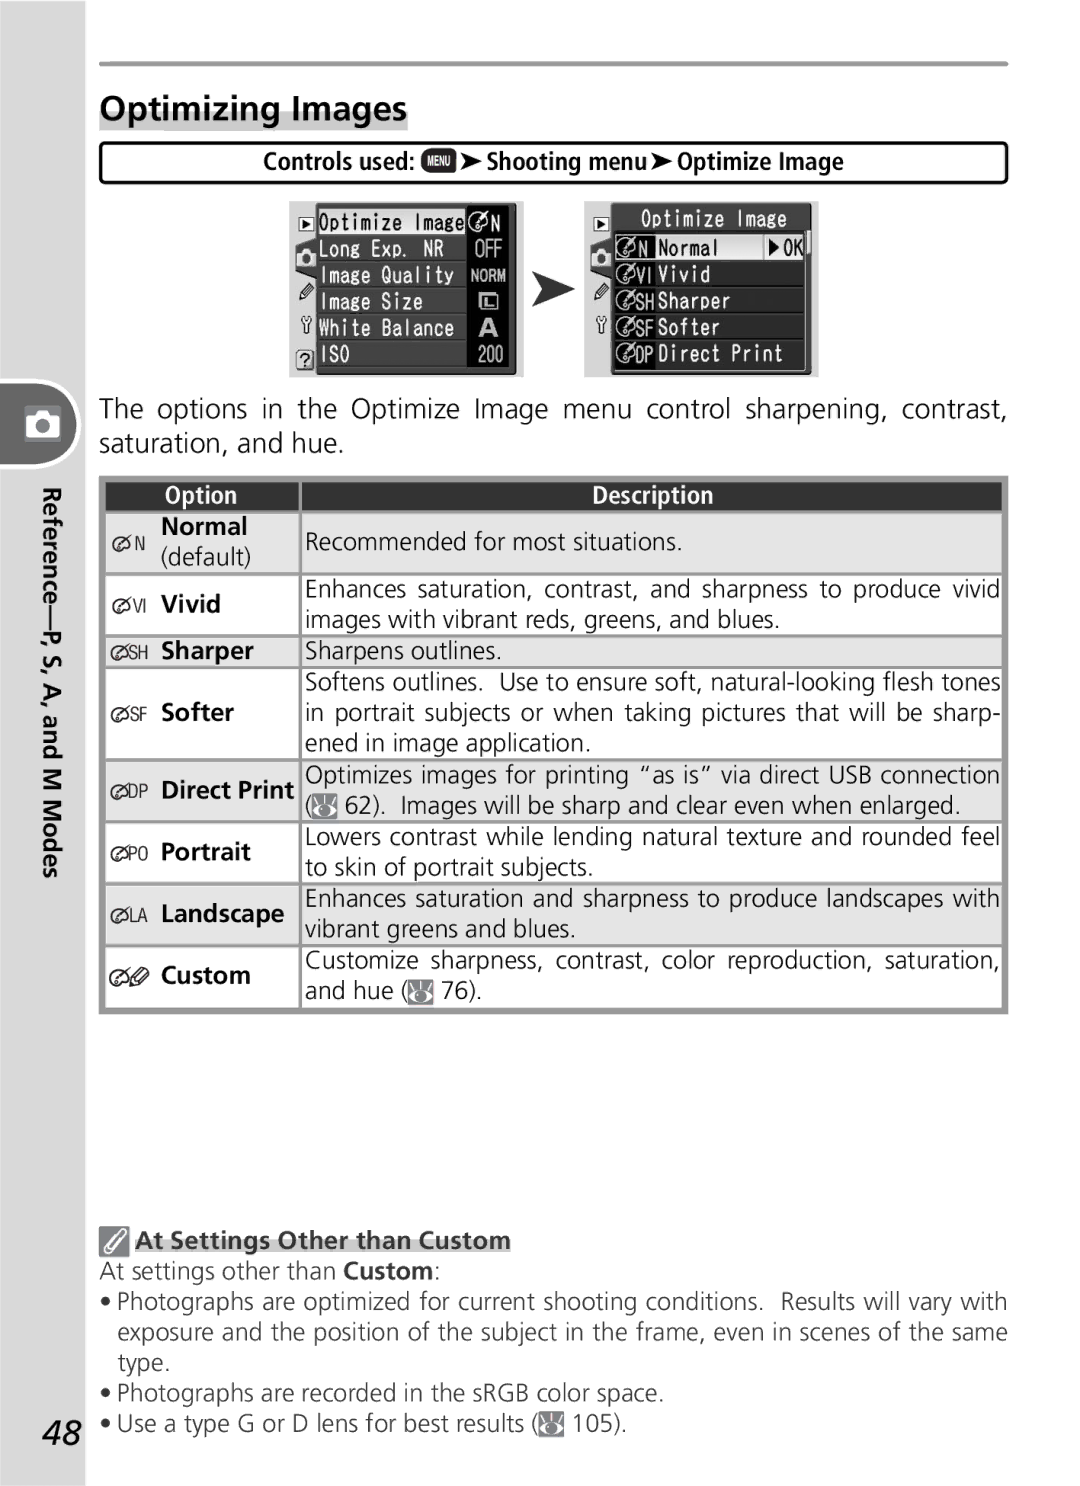 Nikon D50 manual Optimizing Images, Option Description, At Settings Other than Custom 